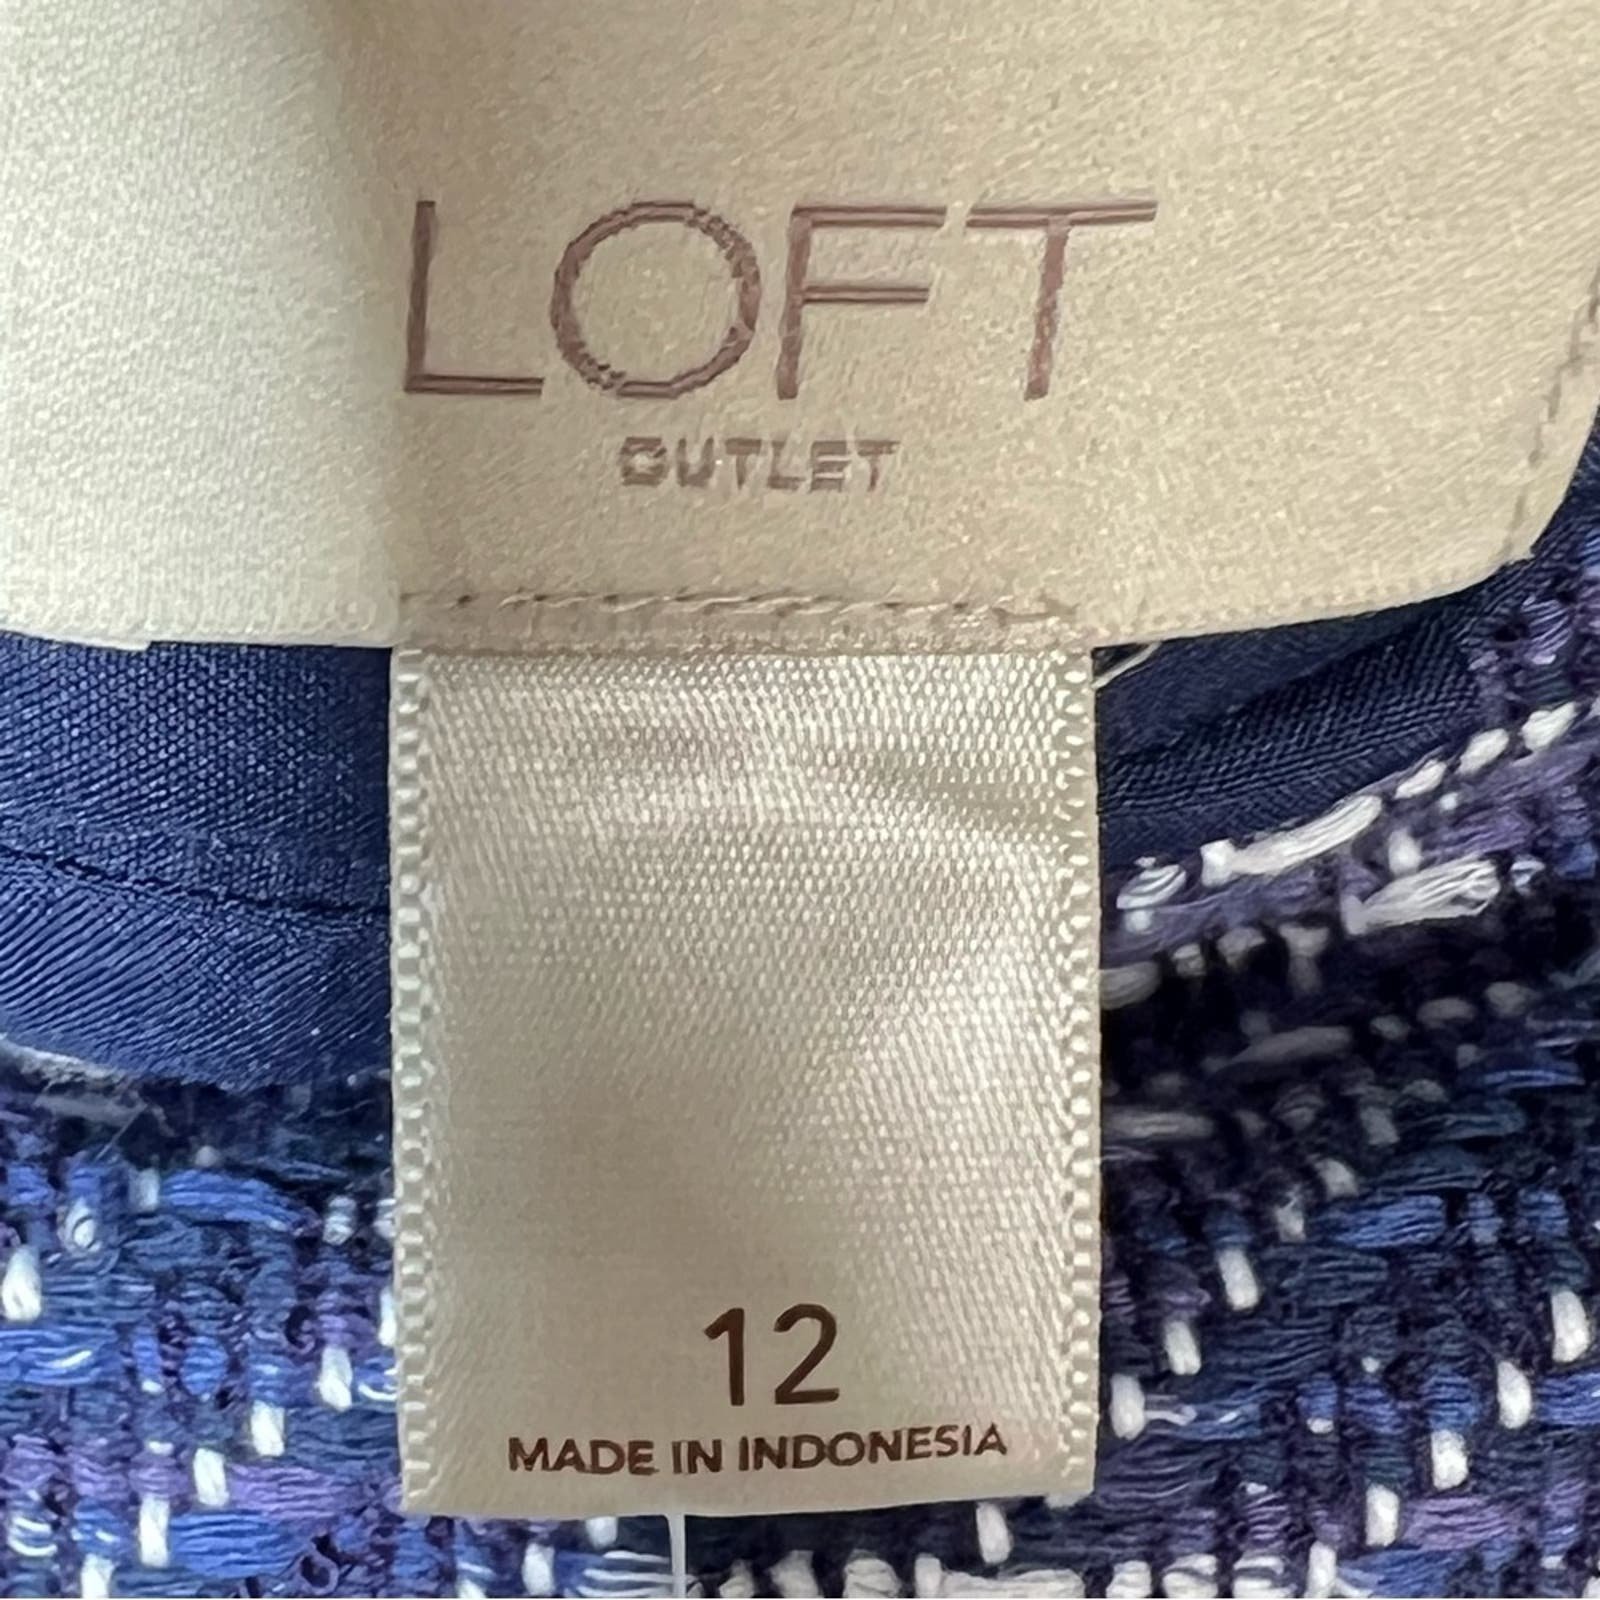 Stylish NWT Loft blue tweed A-line casual skirt size 12 B51 Lu4uBFGqn on sale